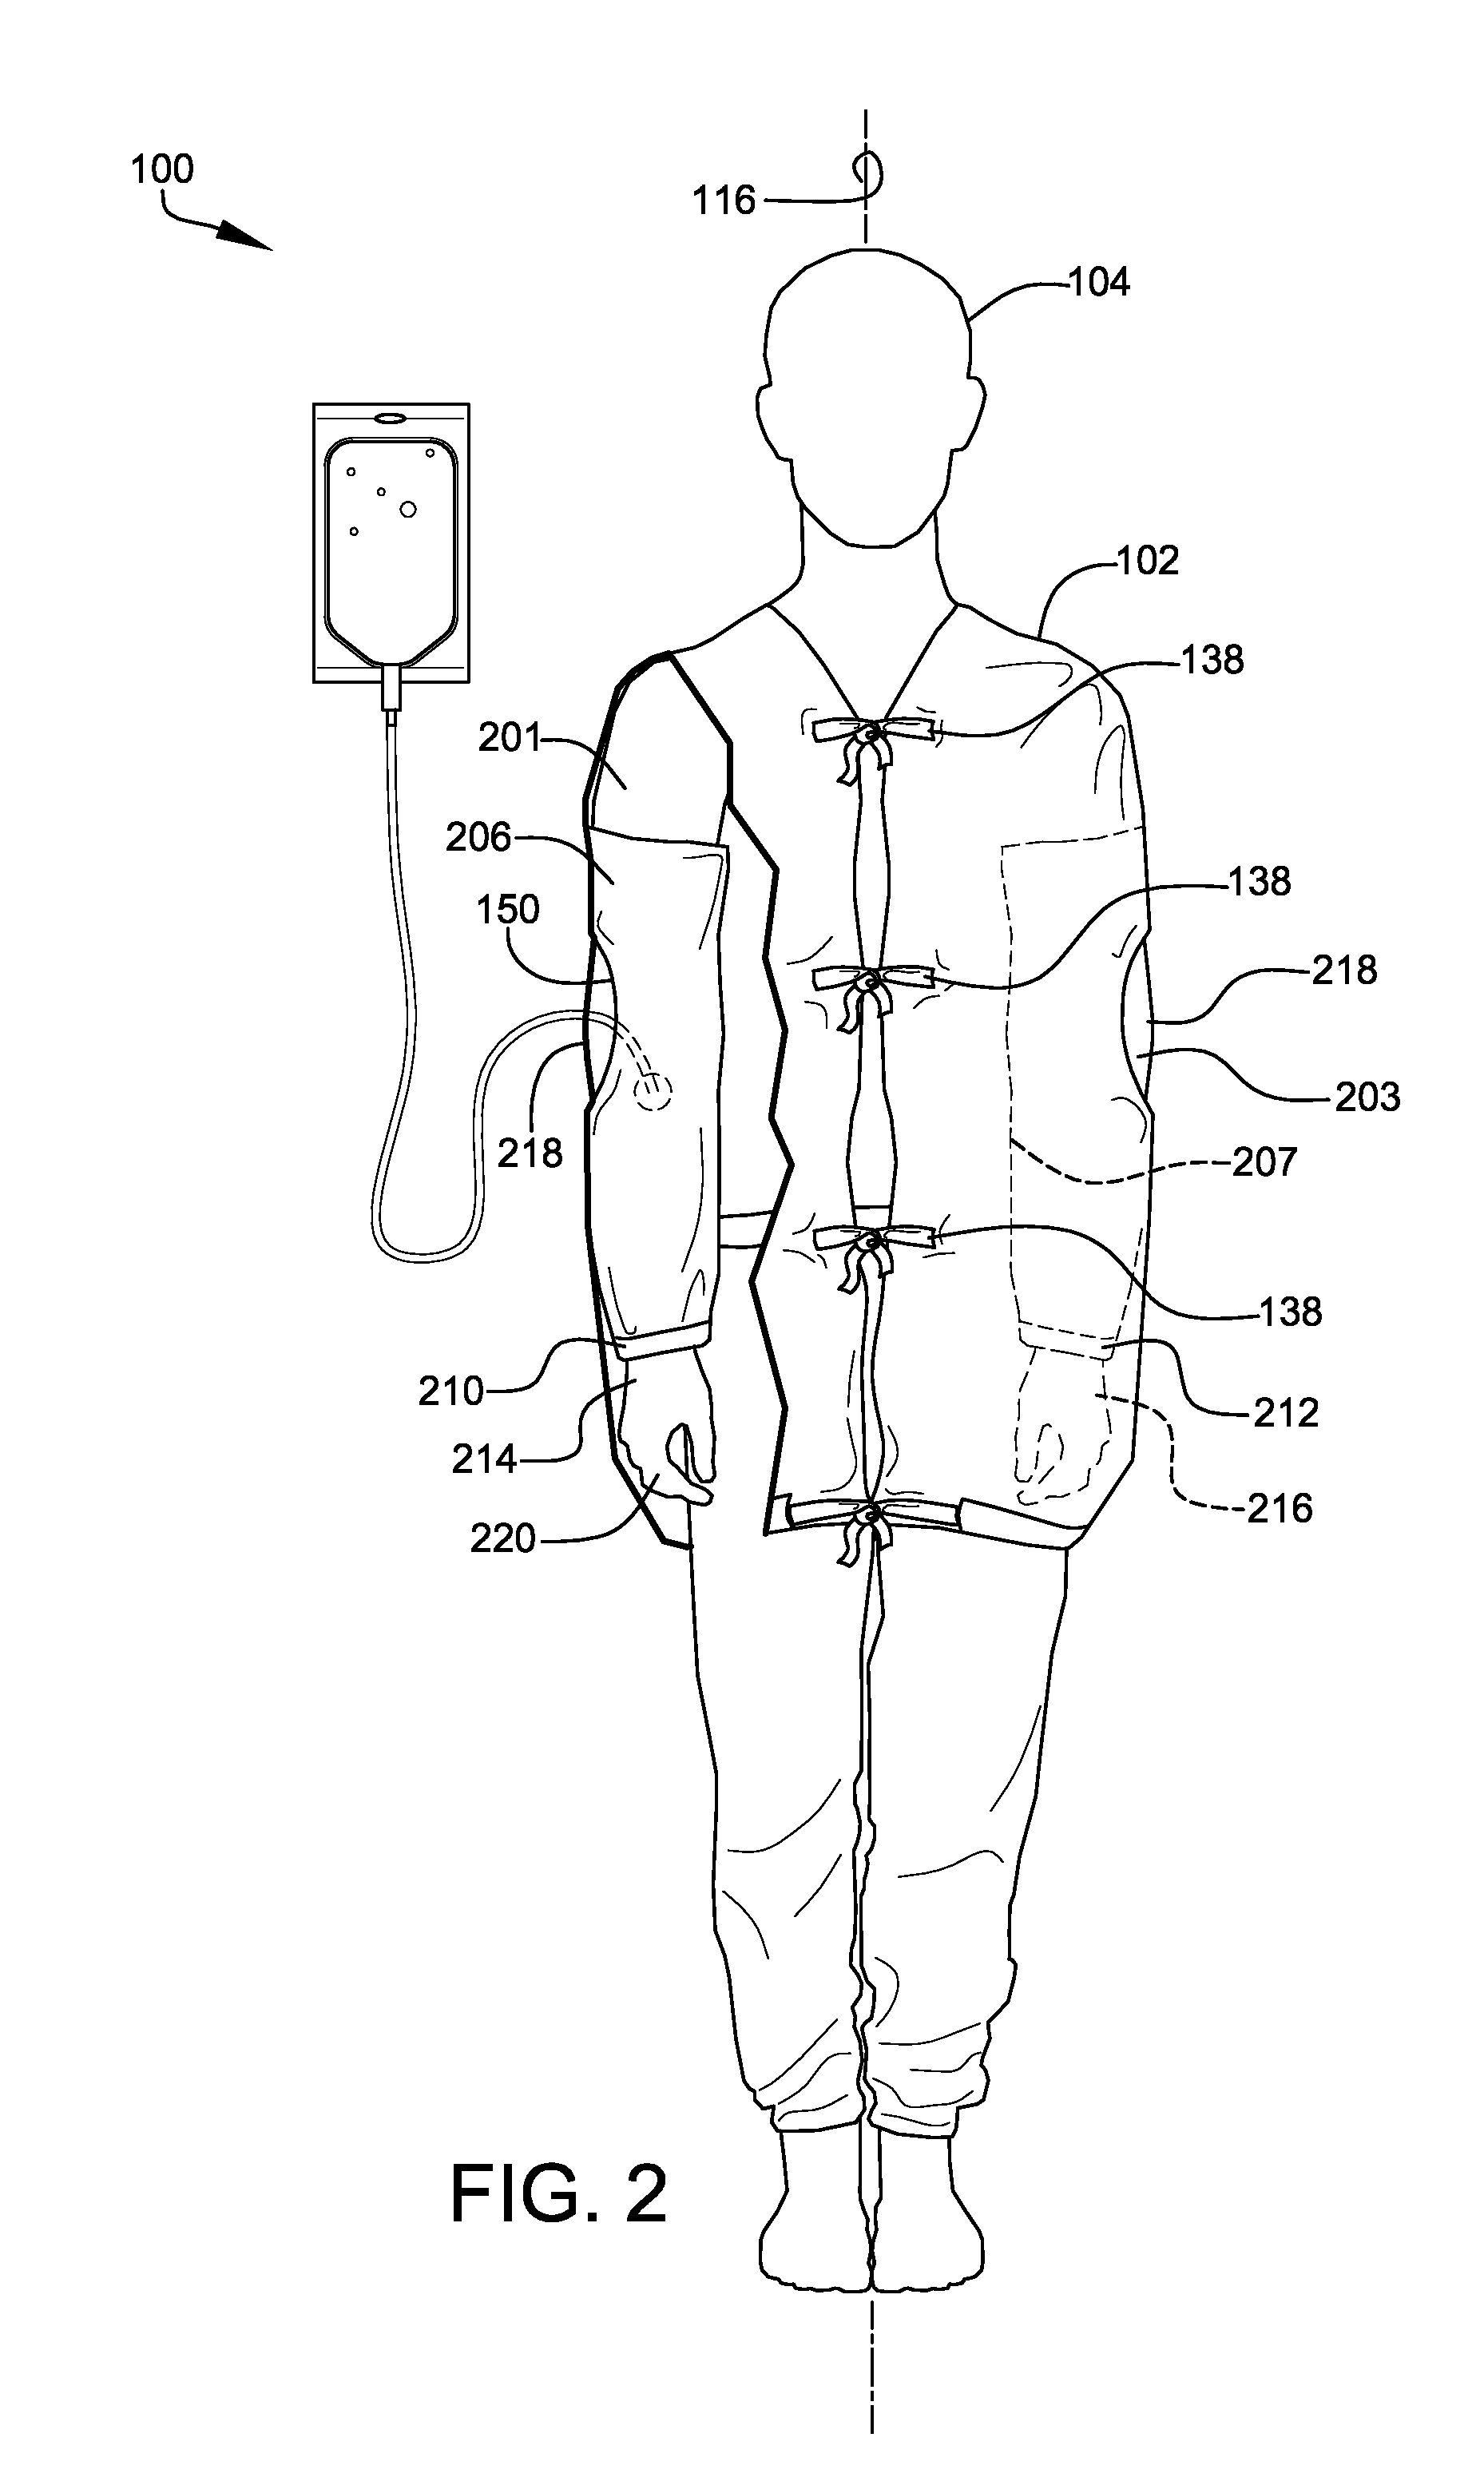 Medical garment systems